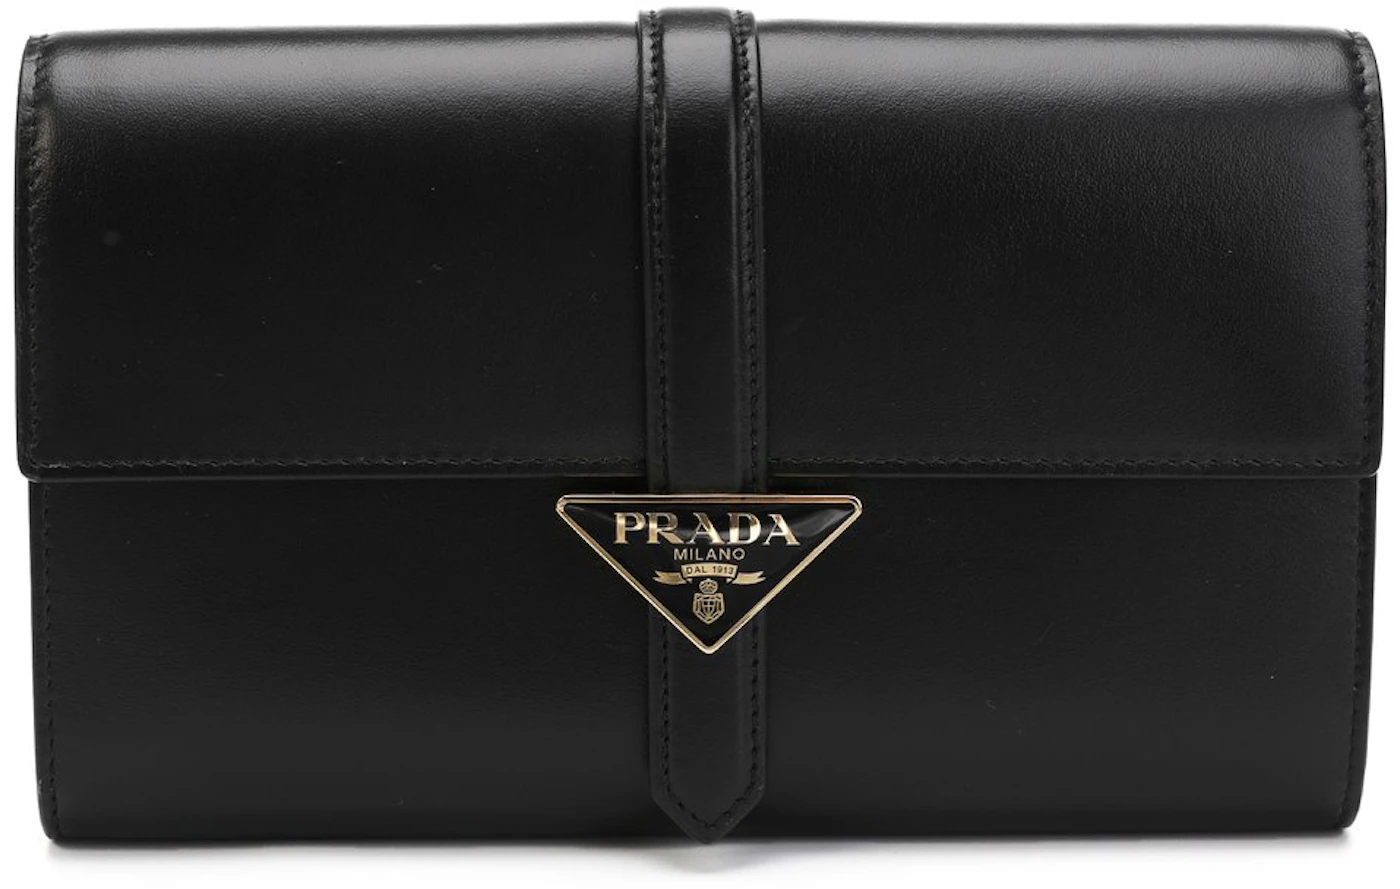 Prada rectangular logo clutch bag - Black  Clutch bag, Prada clutch, Prom  clutch bags